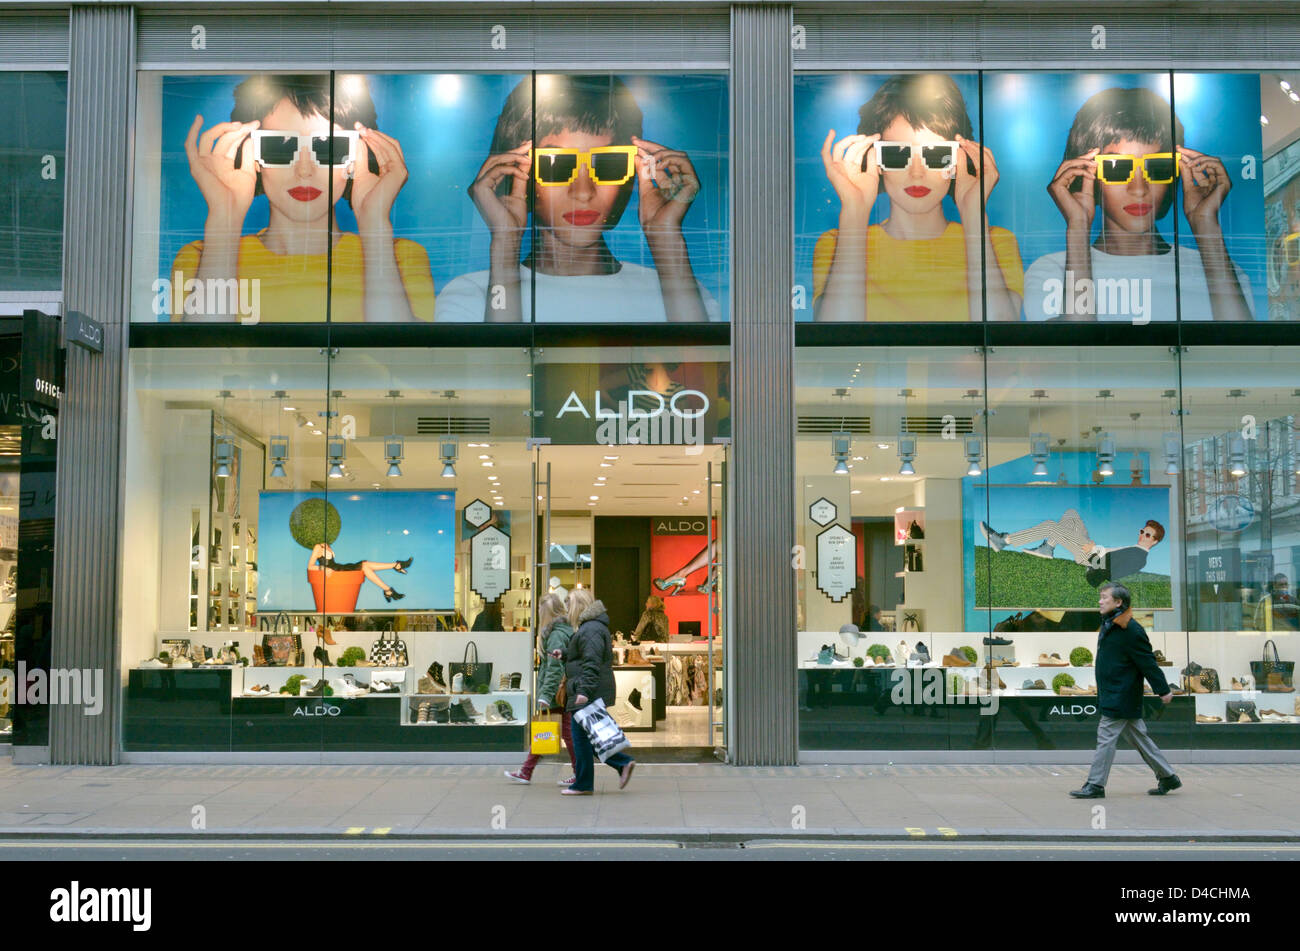 Aldo shoe shop in Oxford Street, London, UK Stock Photo - Alamy